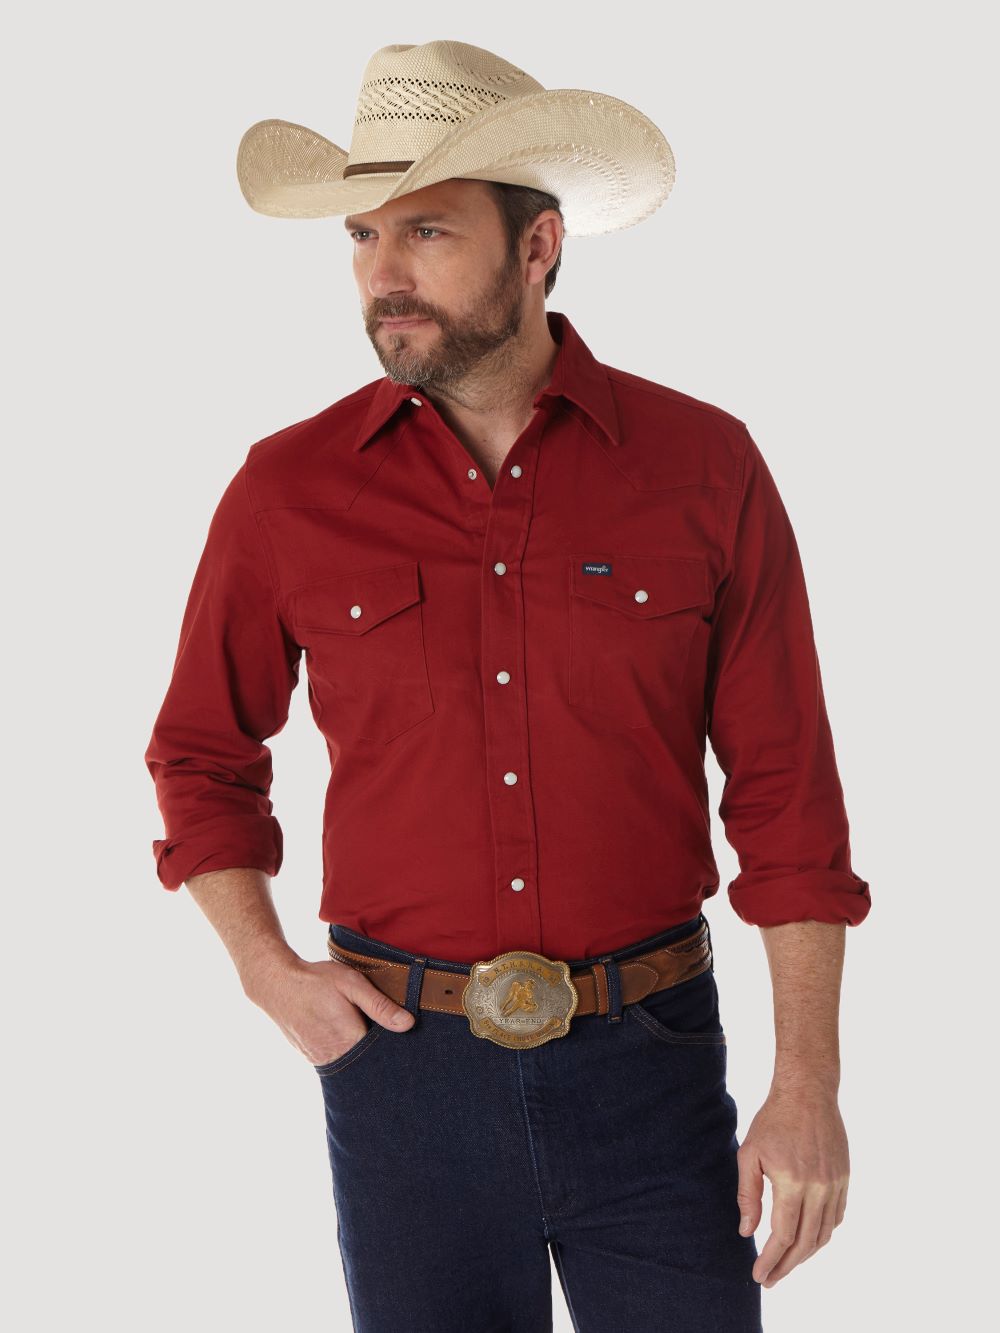 'Wrangler' Men's Advanced Comfort Cowboy Cut Snap Front - Red